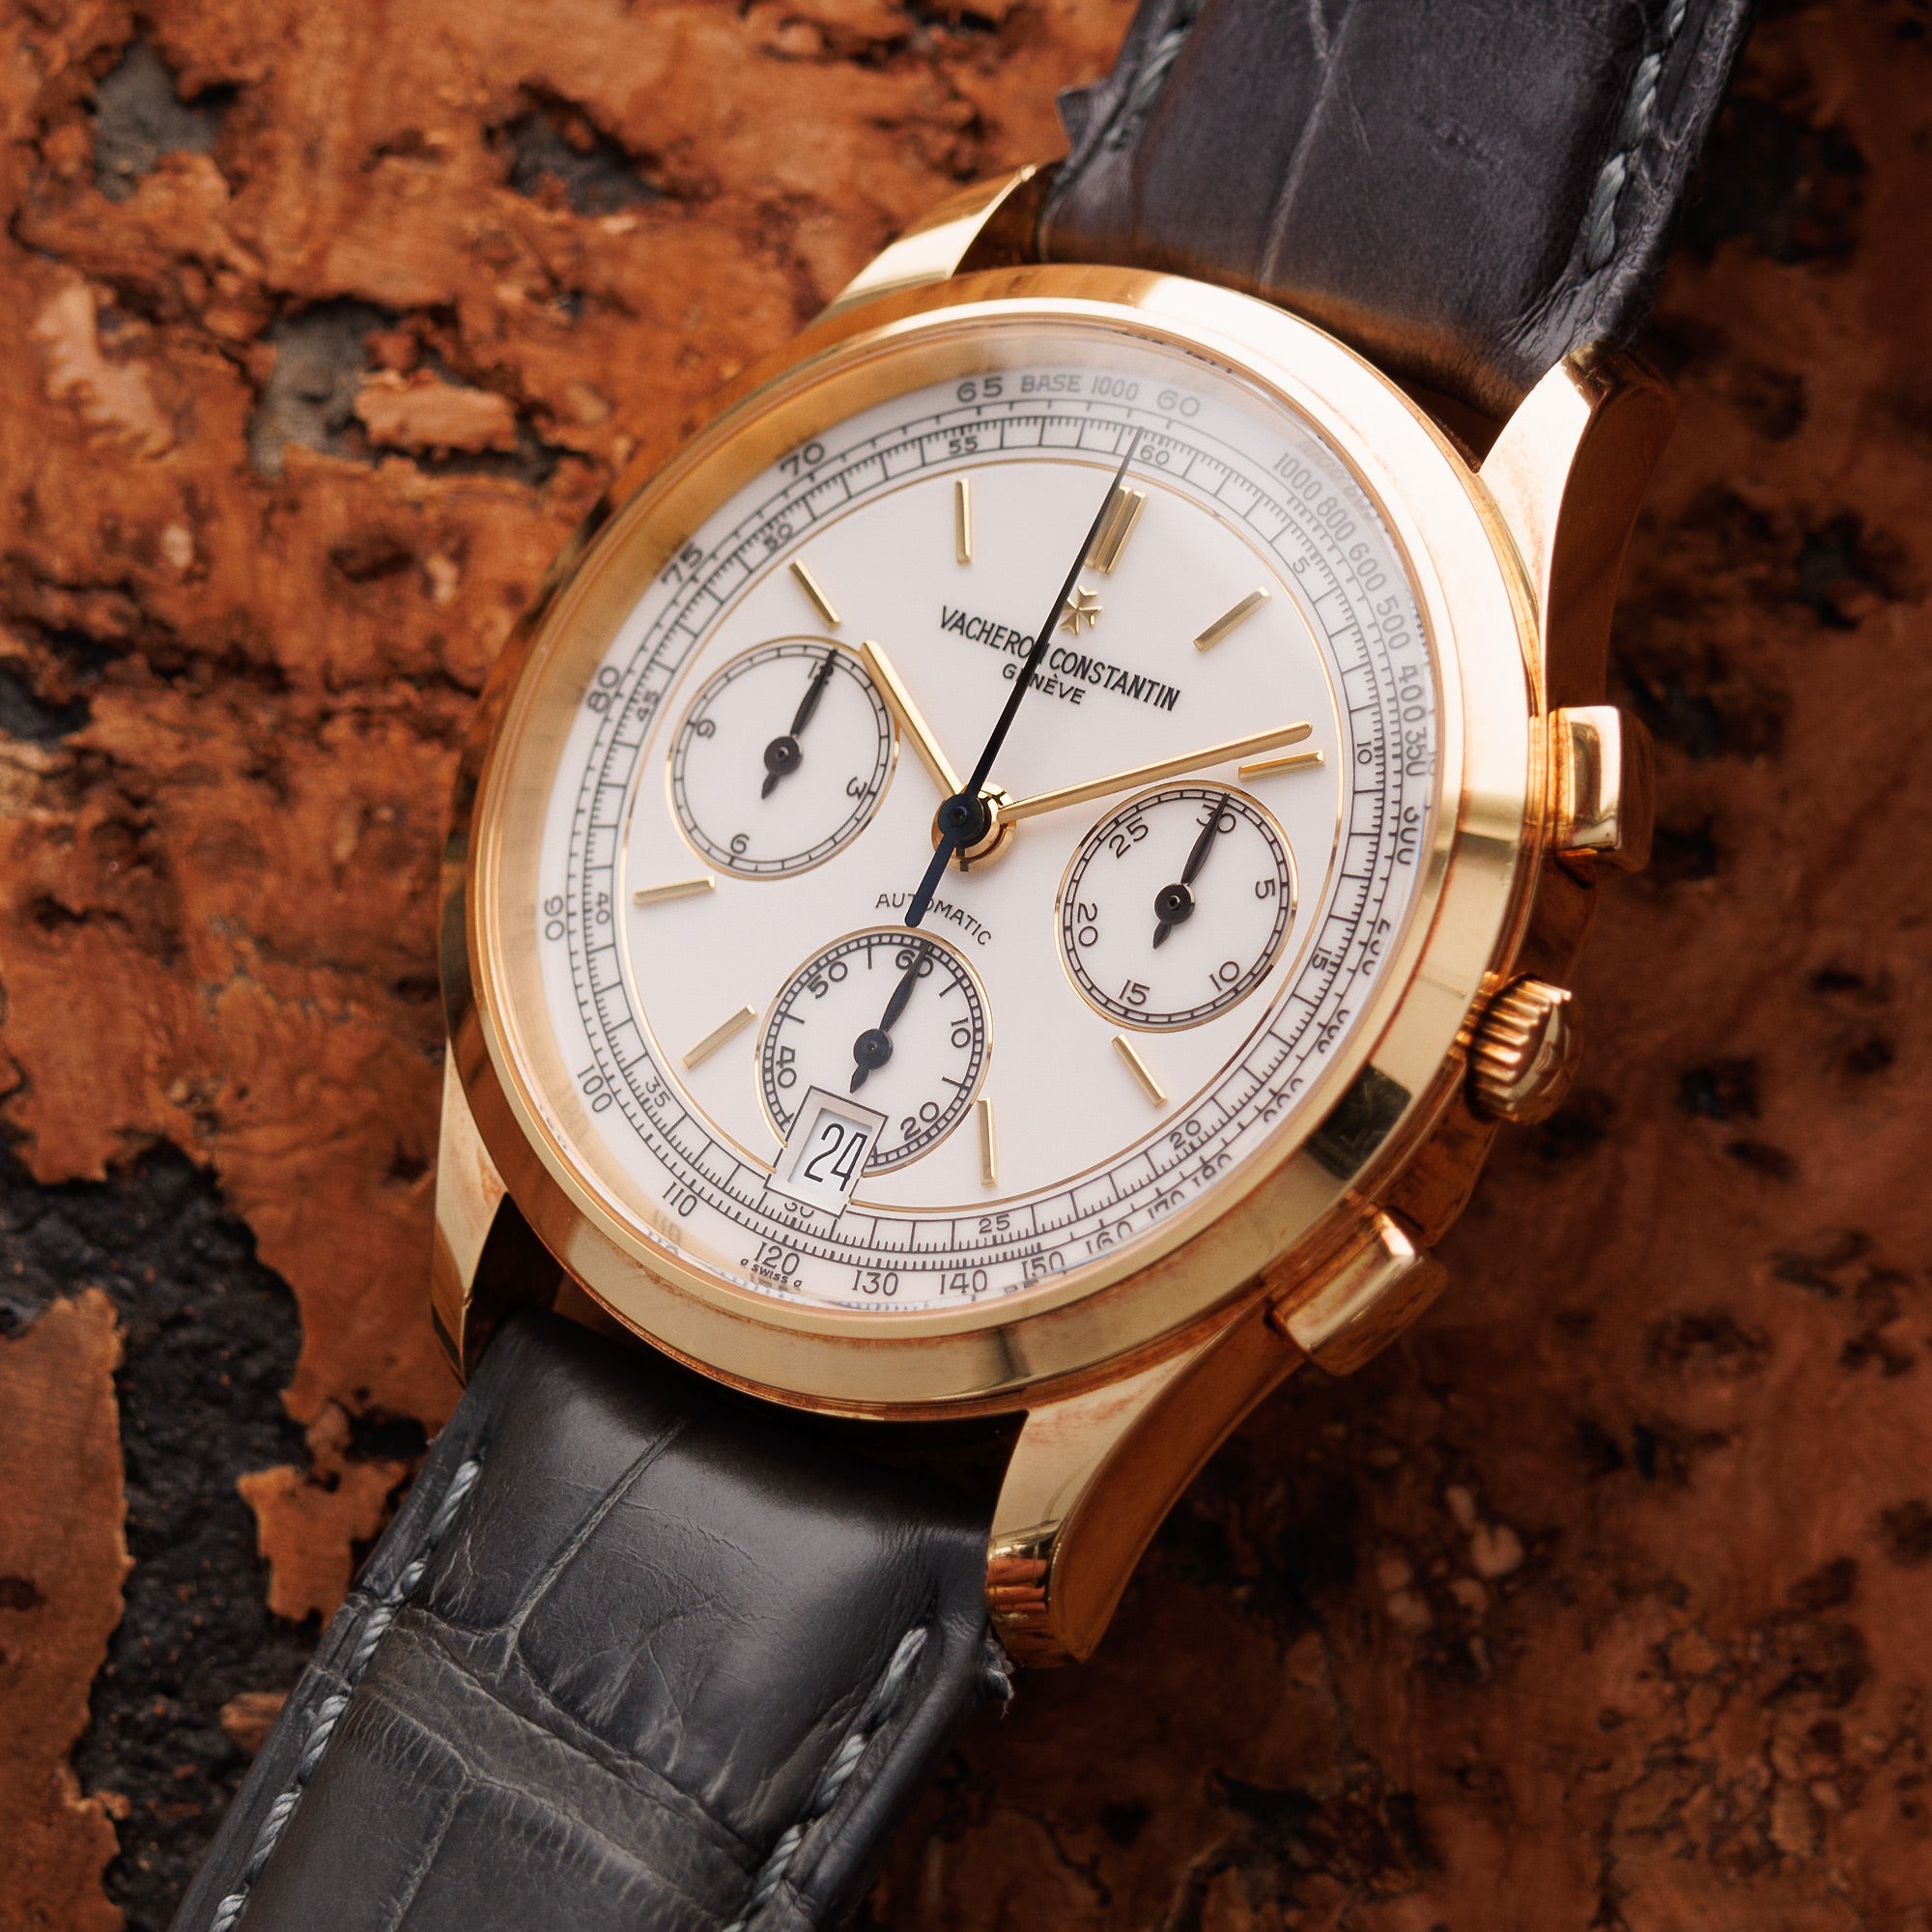 Vacheron Constantin - Vacheron Constantin Yellow Gold Chronograph Watch Ref. 49002 - The Keystone Watches